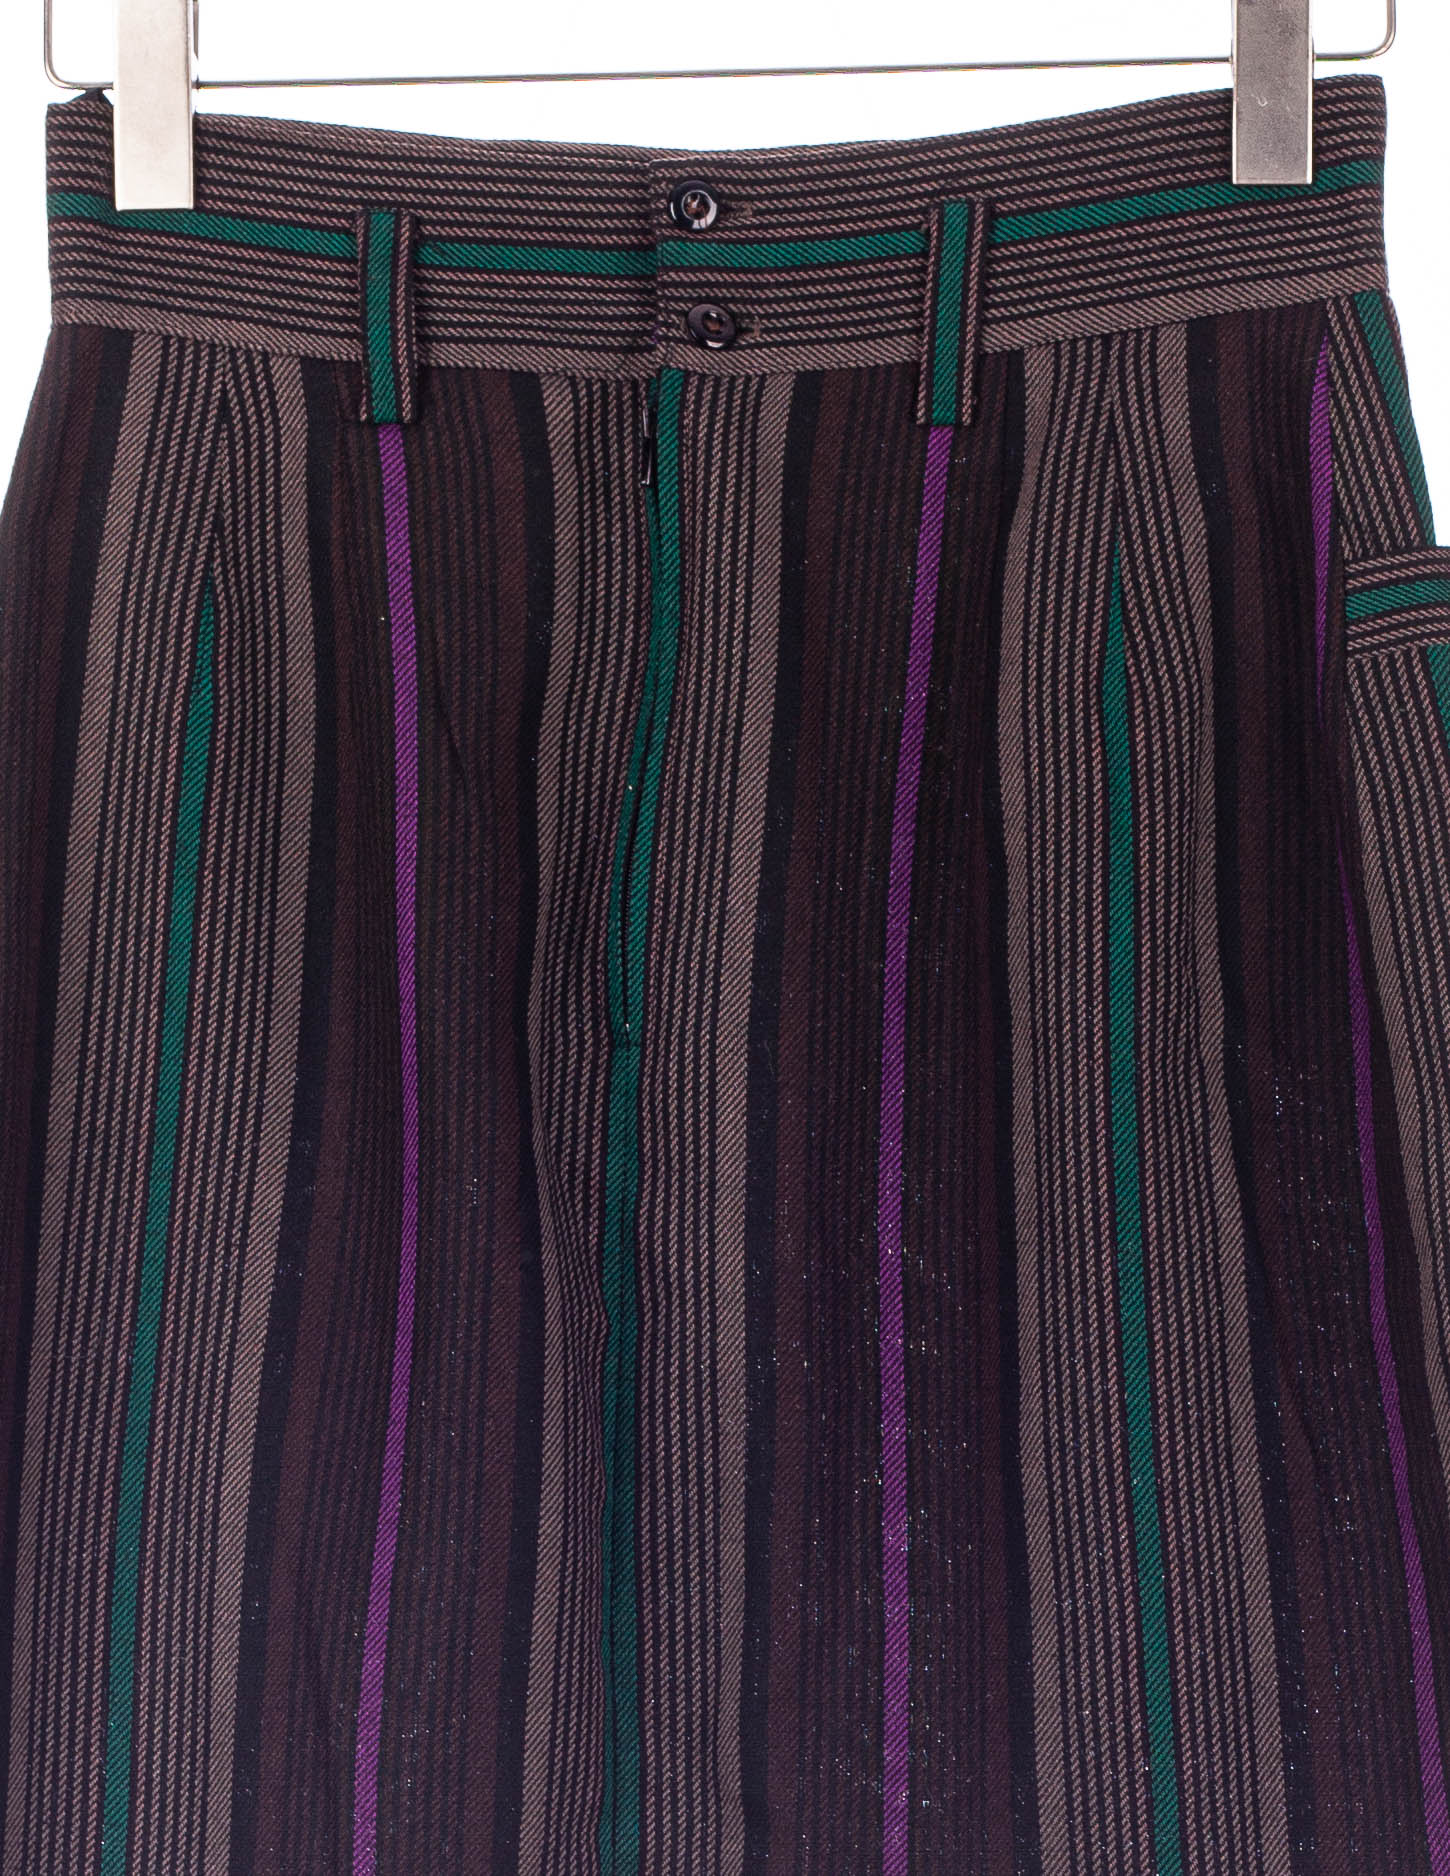 Maxi skirt striped brown / striped